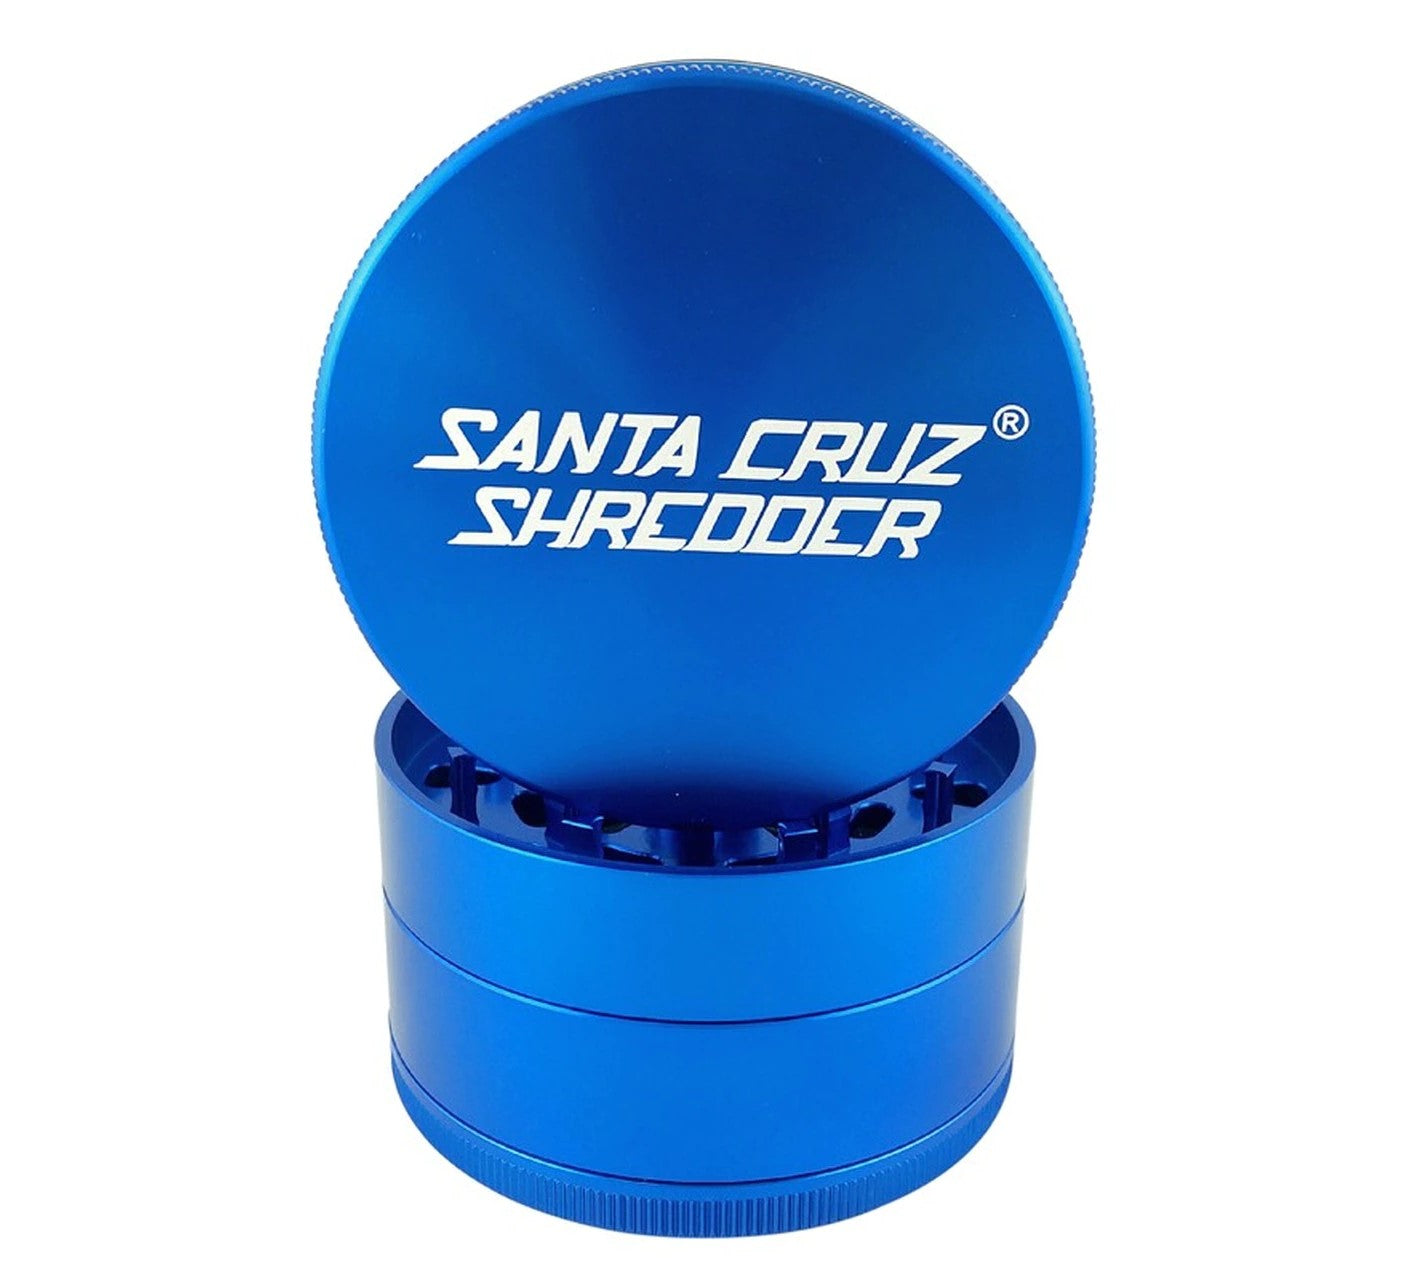 Santa Cruz - 4'' Jumbo 4 Piece Grinder